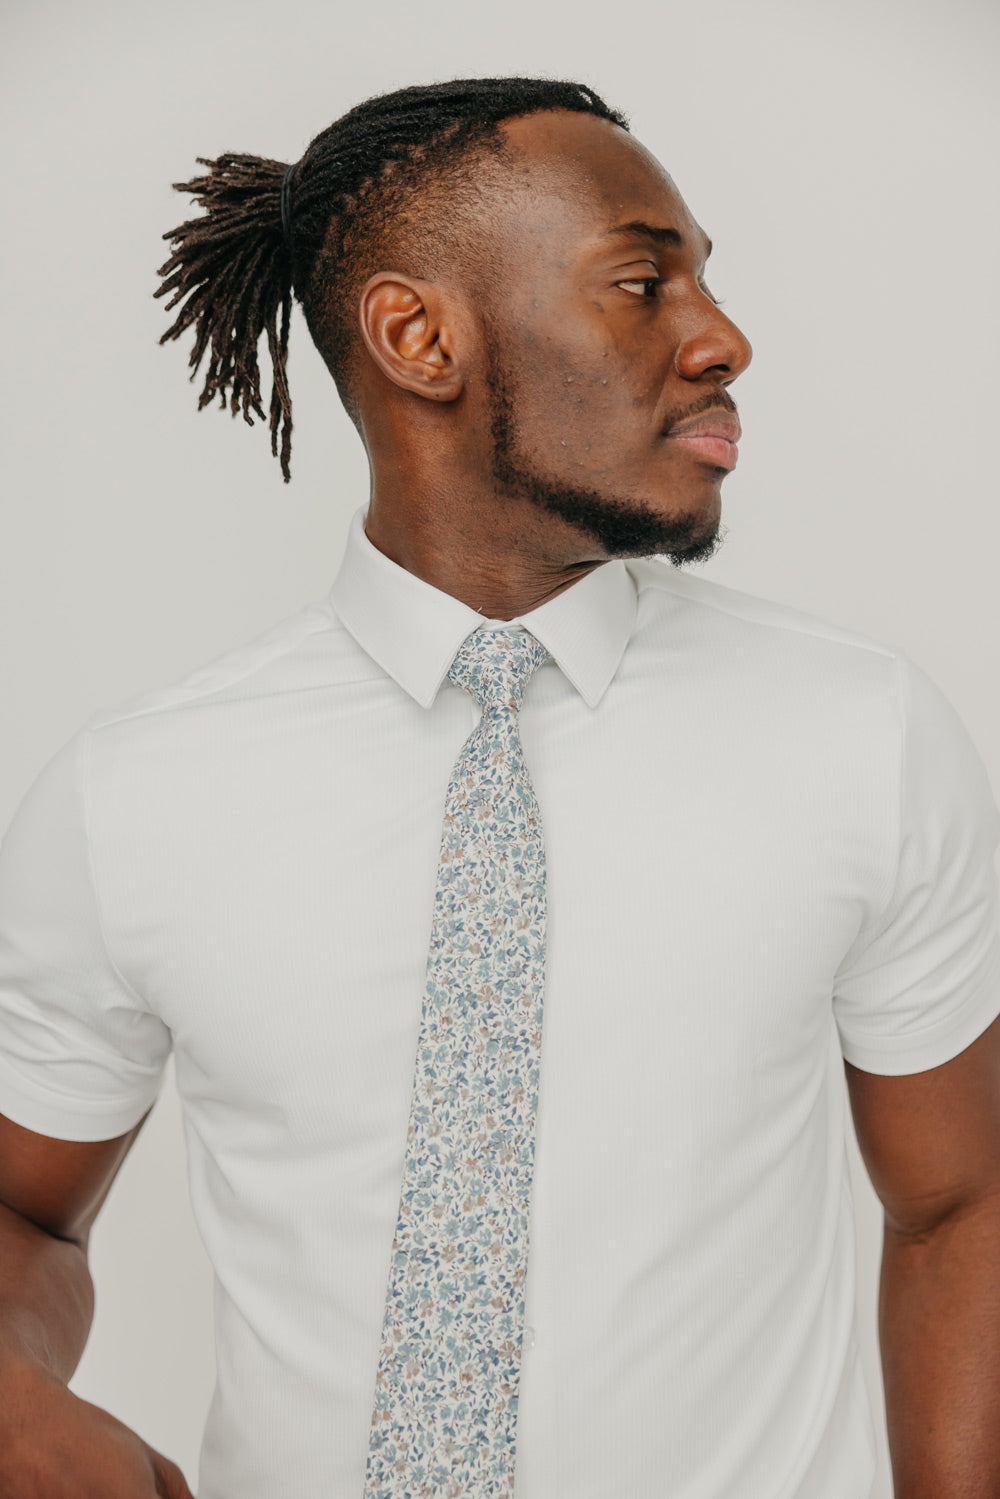 Scorpion Grass tie worn with a white shirt.